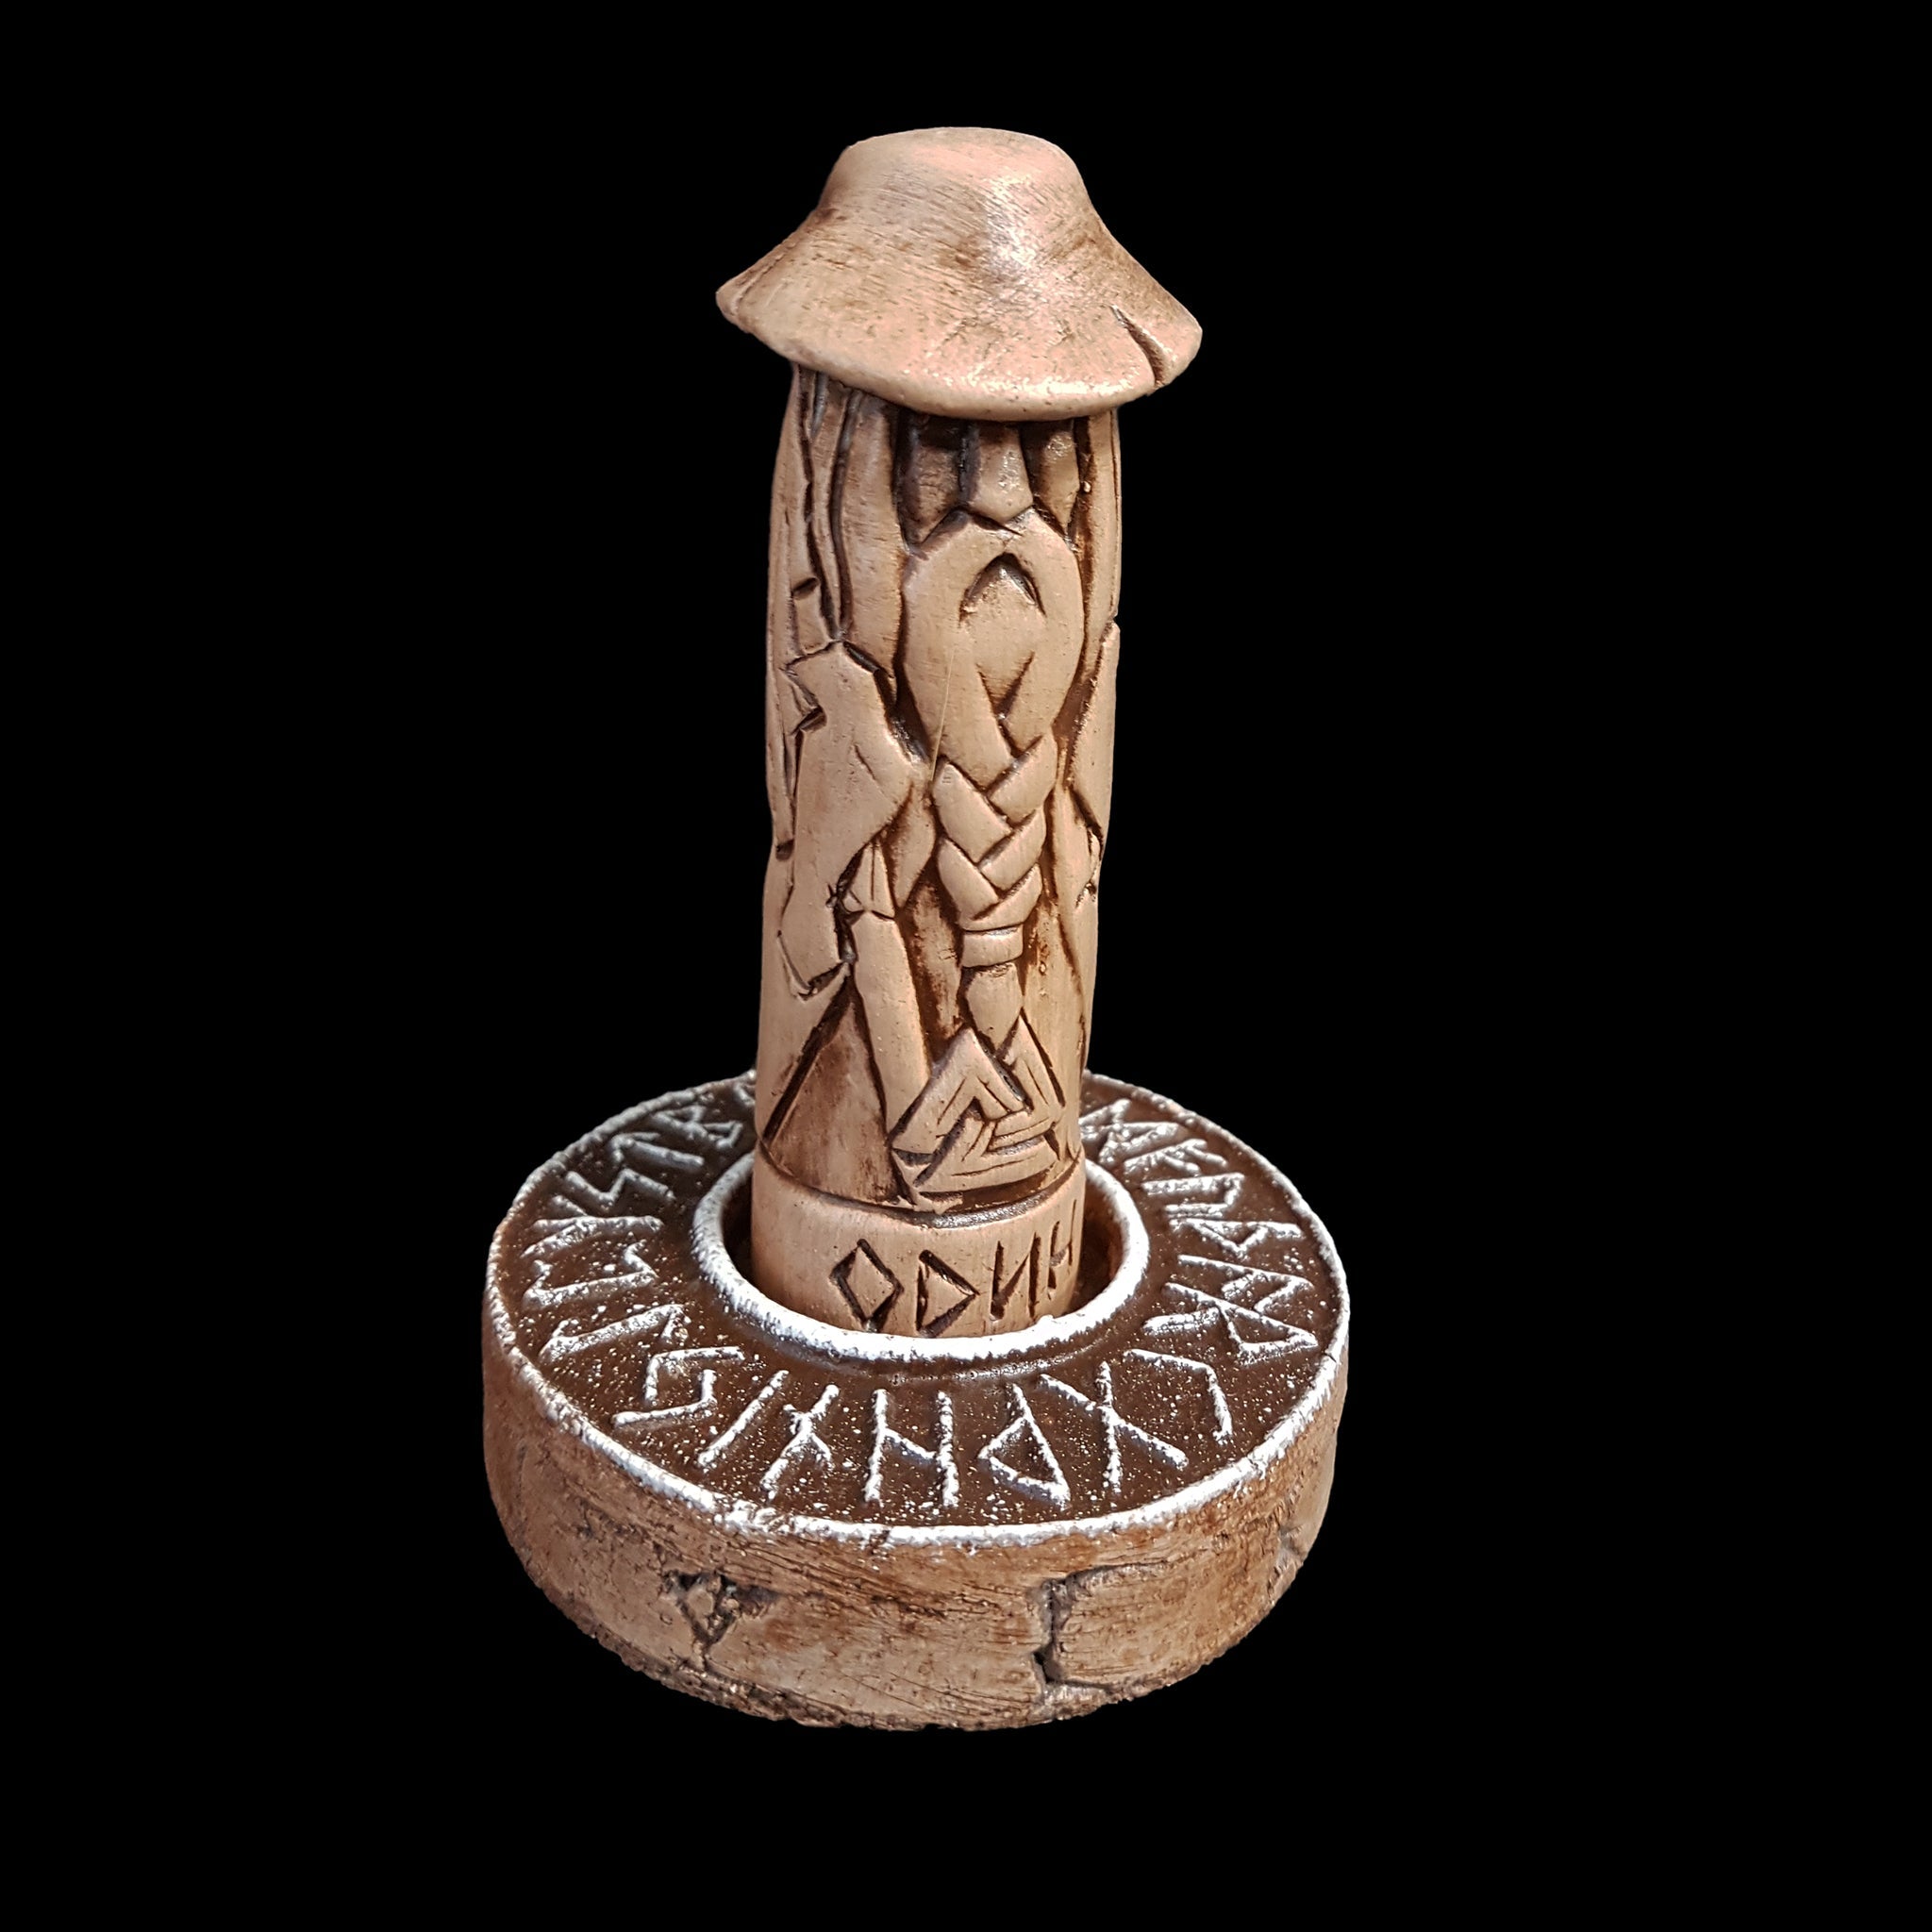 Hand-Crafted Ceramic Elder Futhark Runic Altar with Odin Statue - Asatru / Heathen